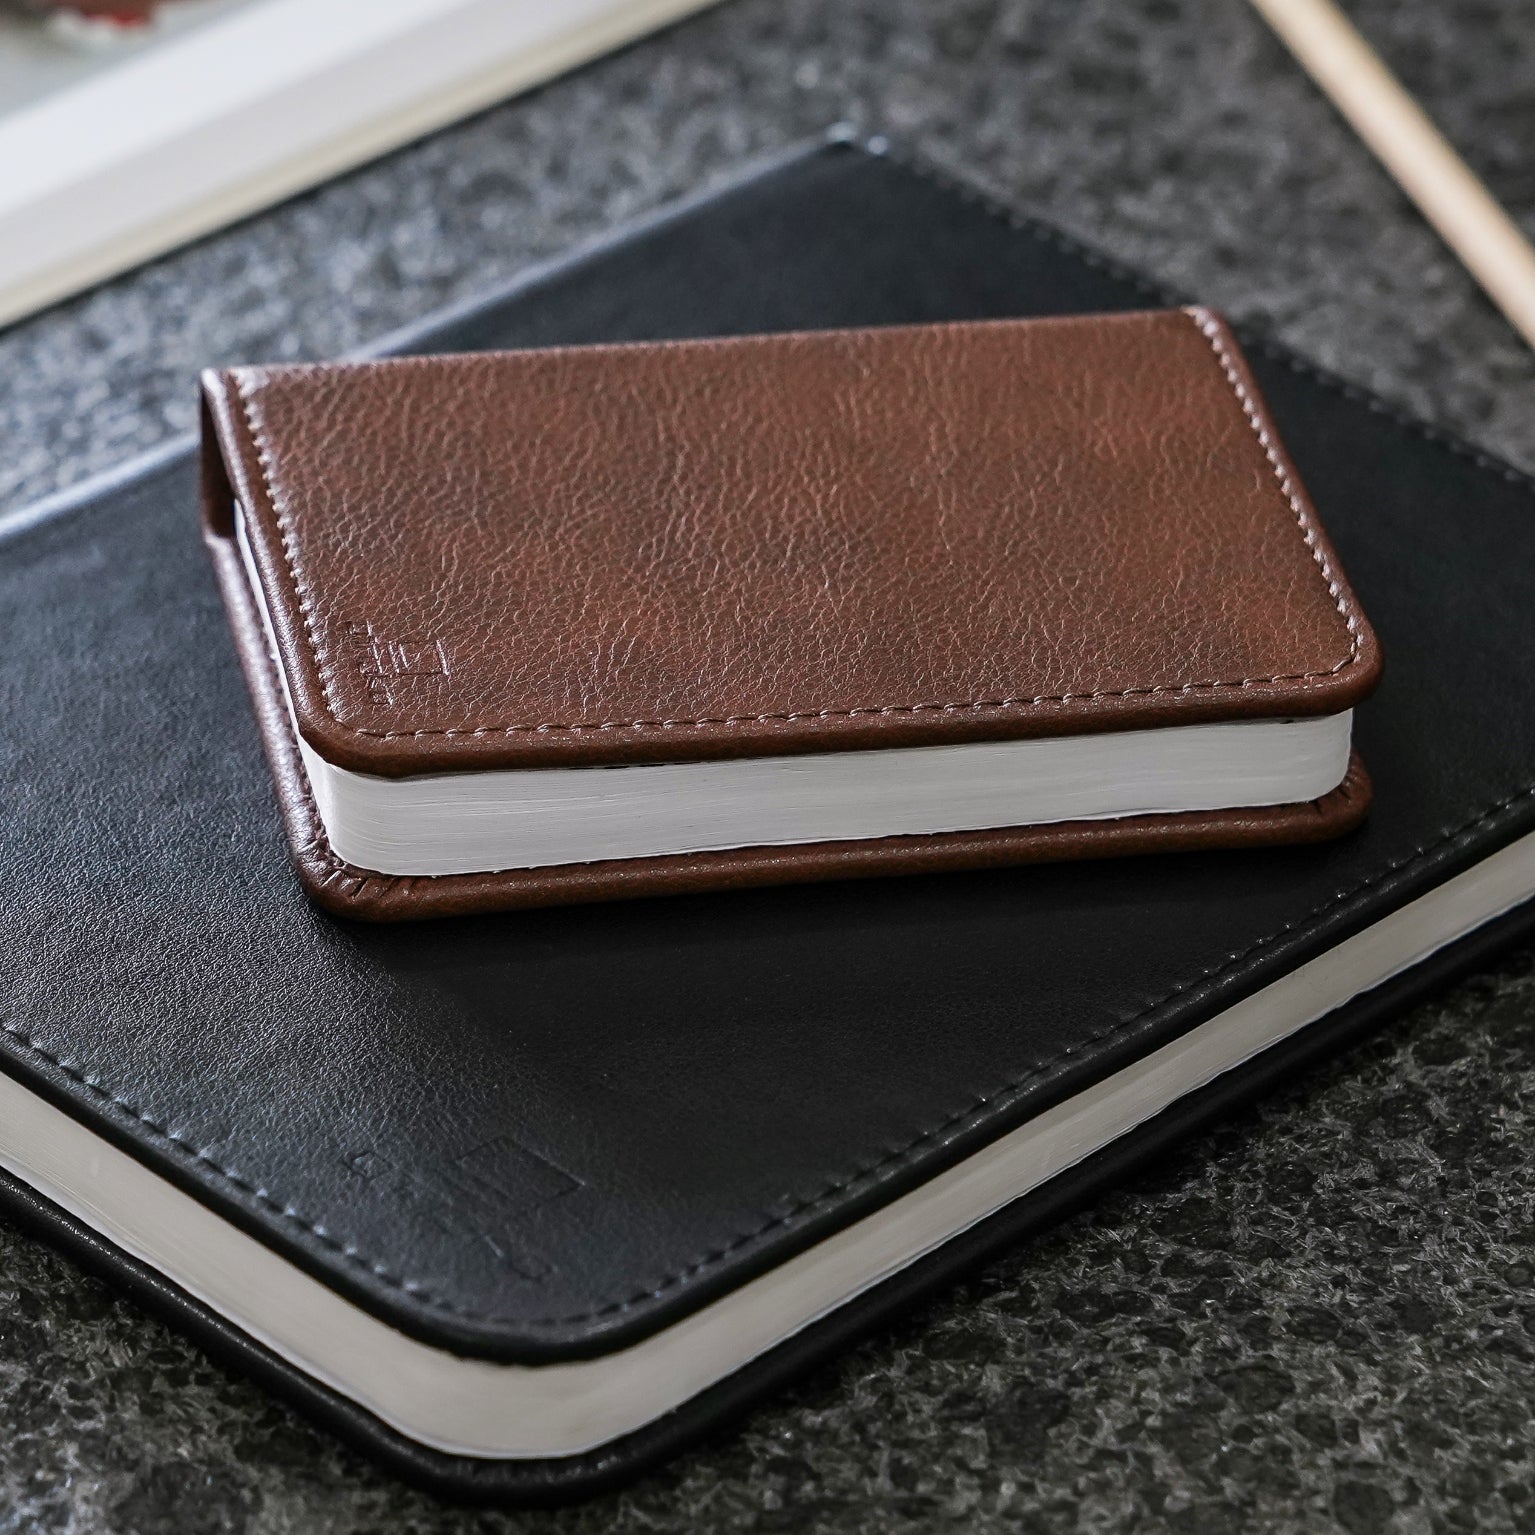 Gingko Mini Fibre Smart Book Light, Leather